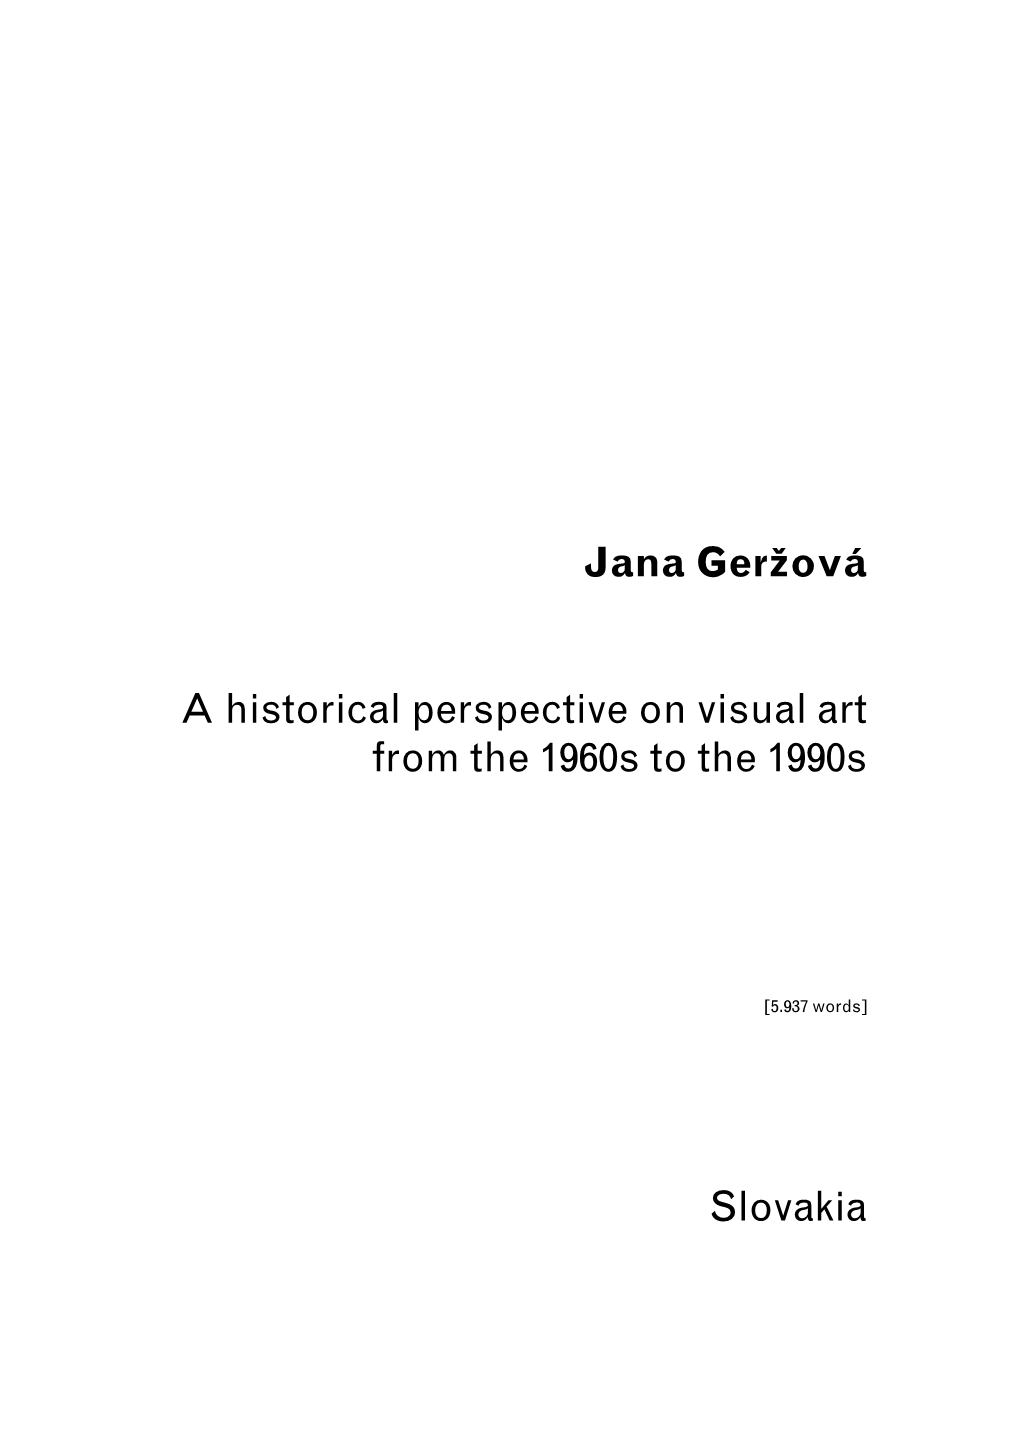 Jana Geržova a Historical Perspective / Slovak Art / Slovakia